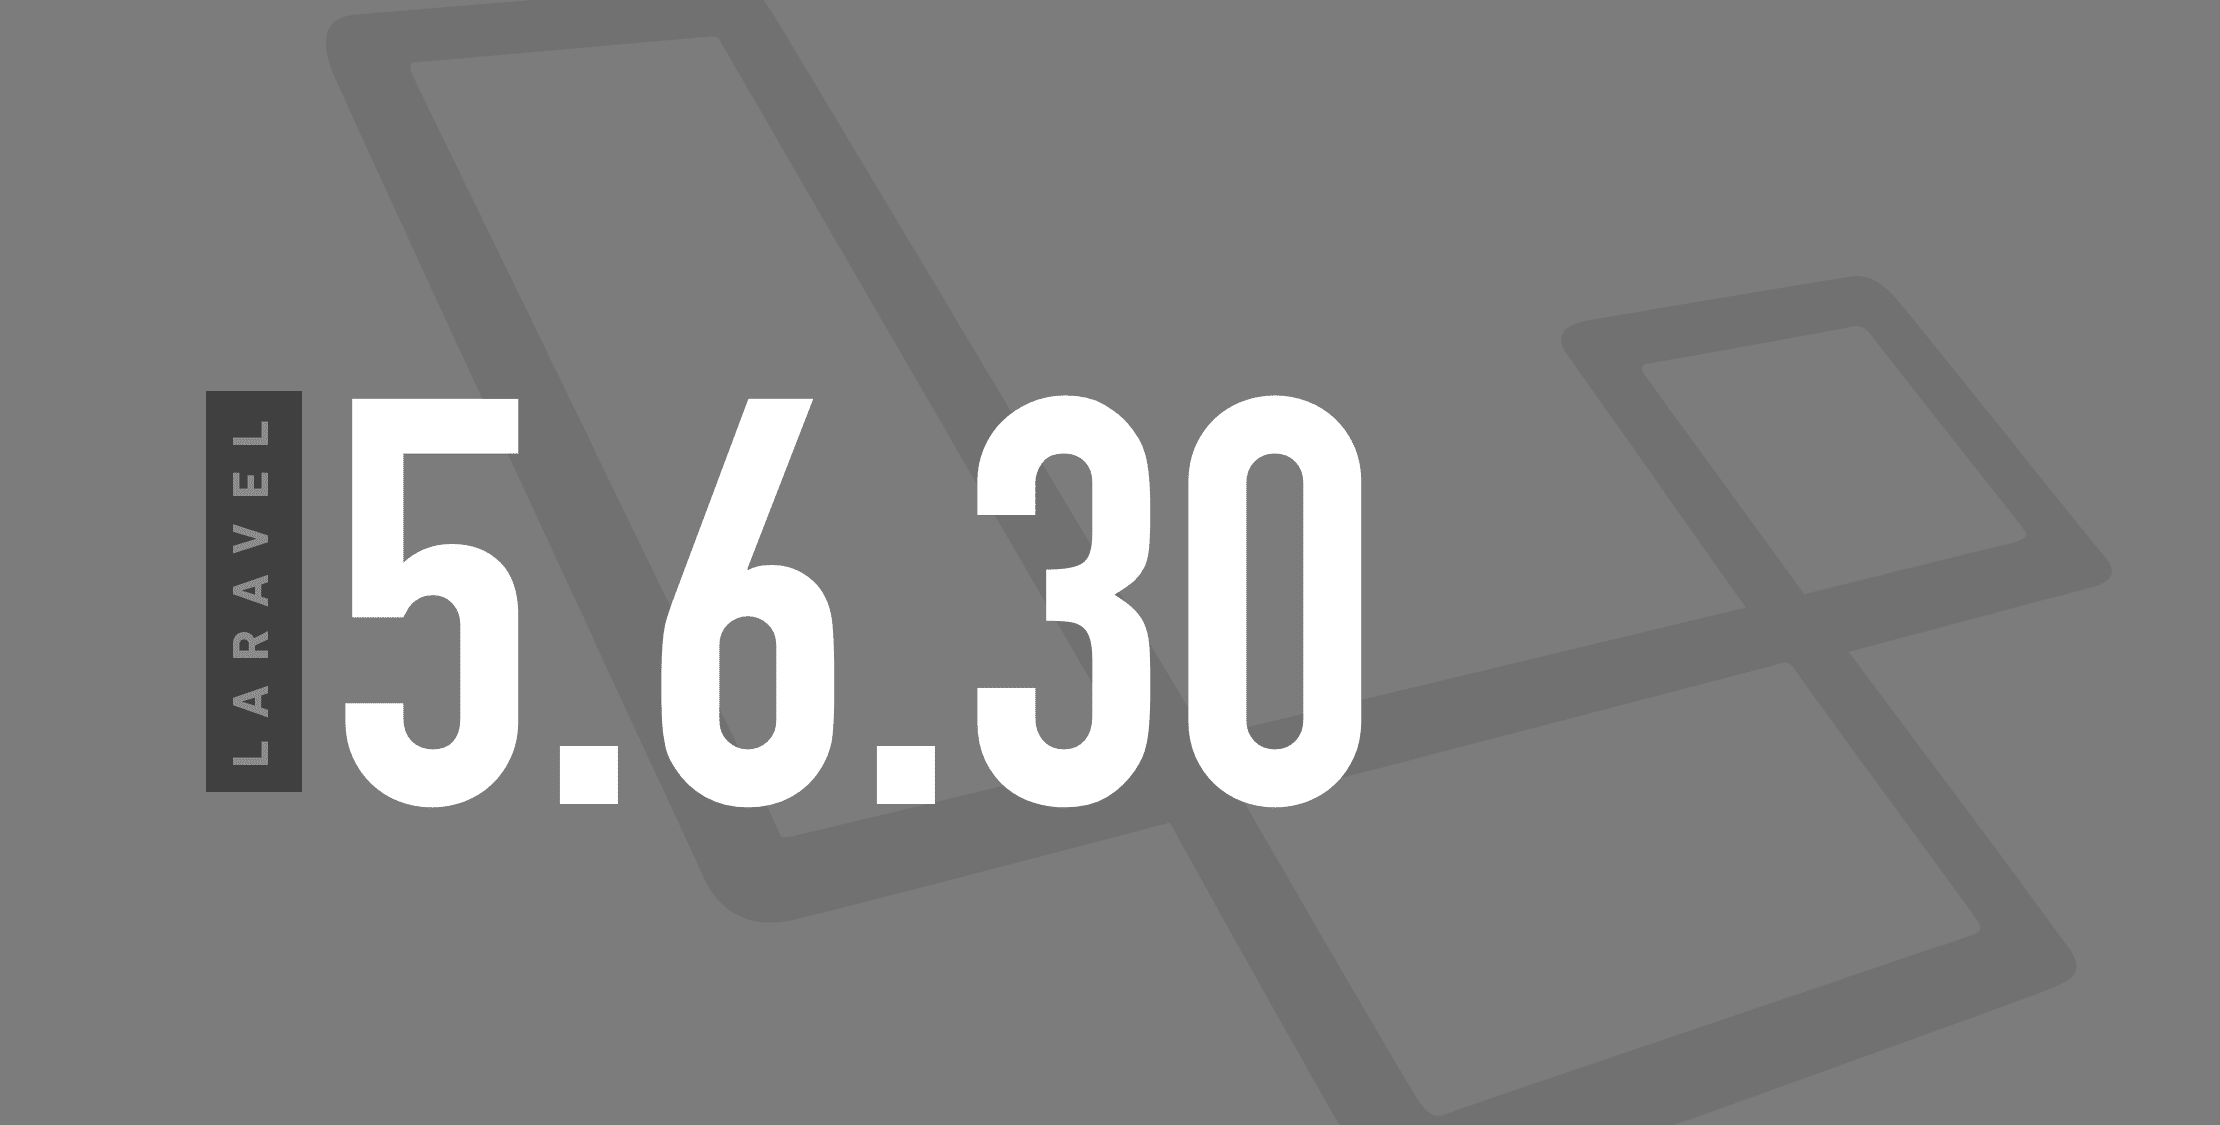 Security Release: Laravel v5.6.30 and v5.5.42 have been released image